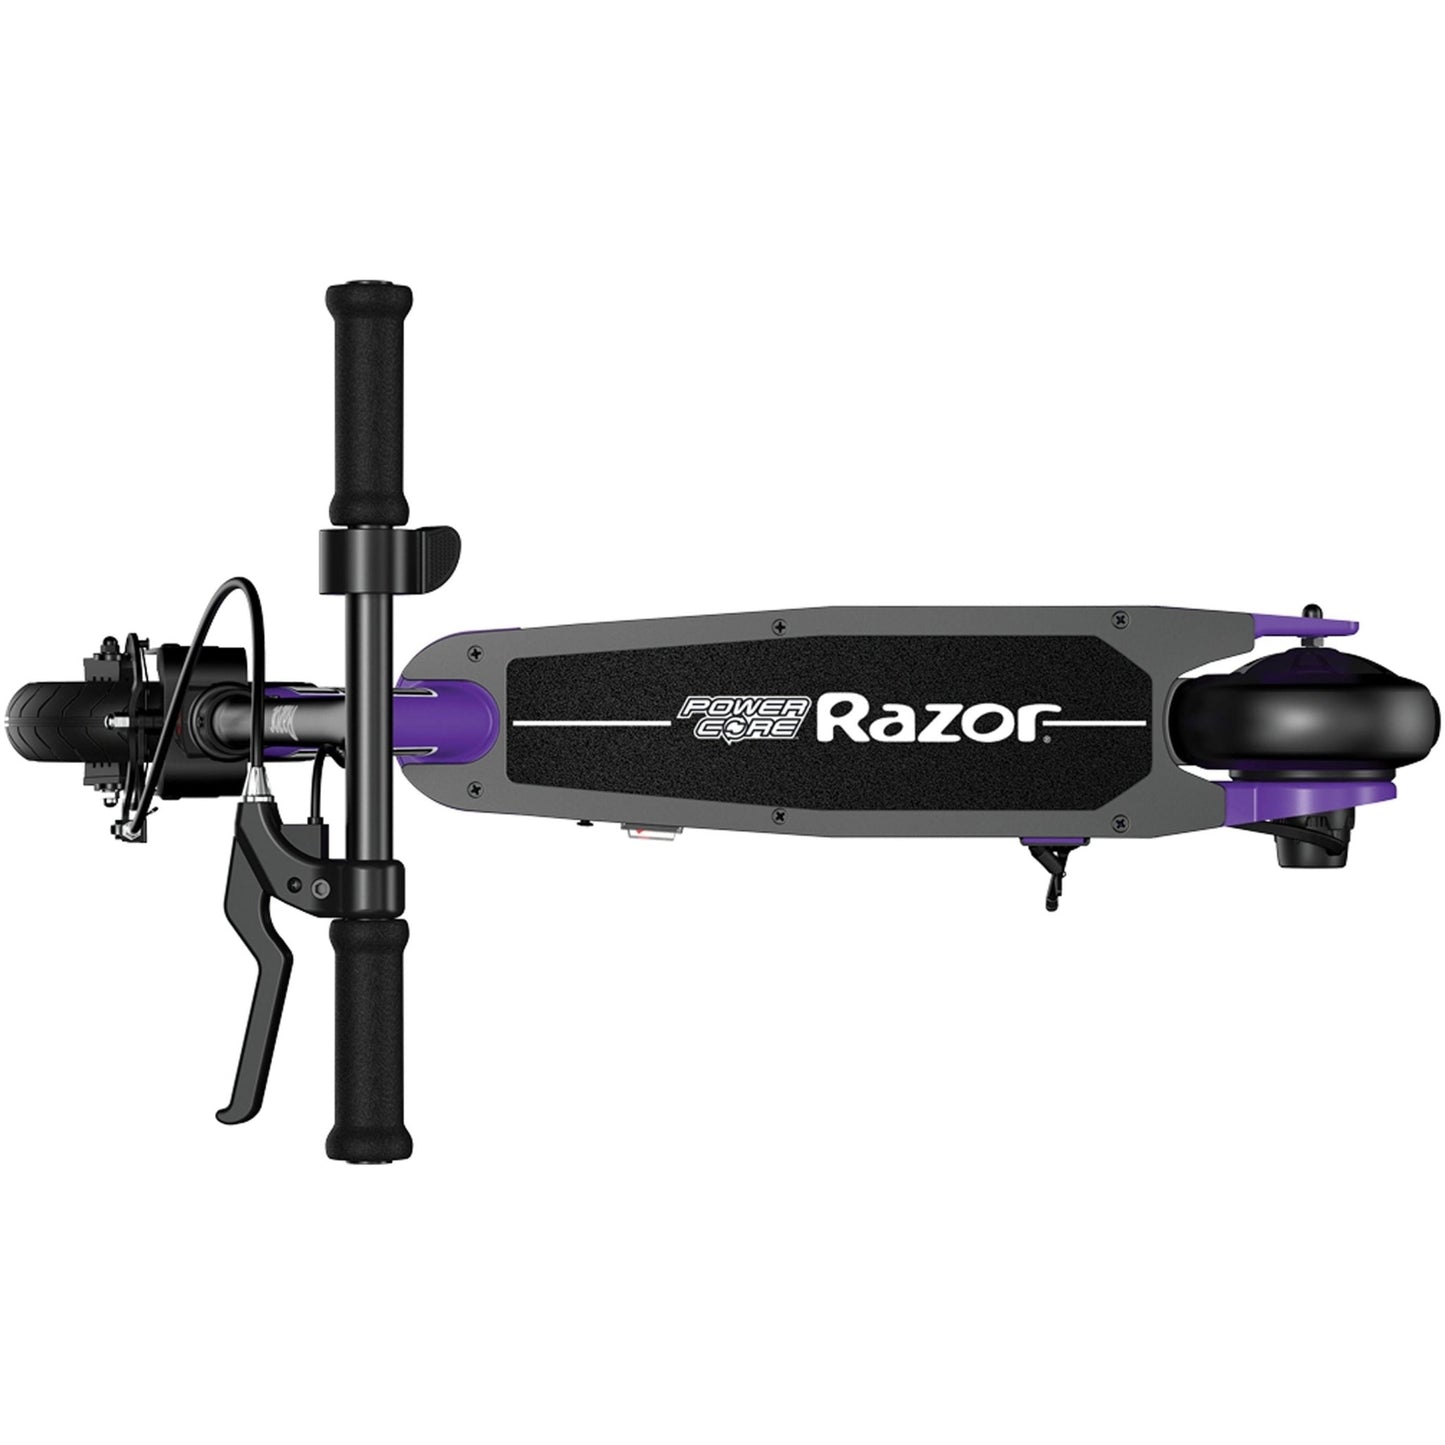 Razor PowerCore S85 12 volt Scooter - Age 8 + - The Online Toy Shop3